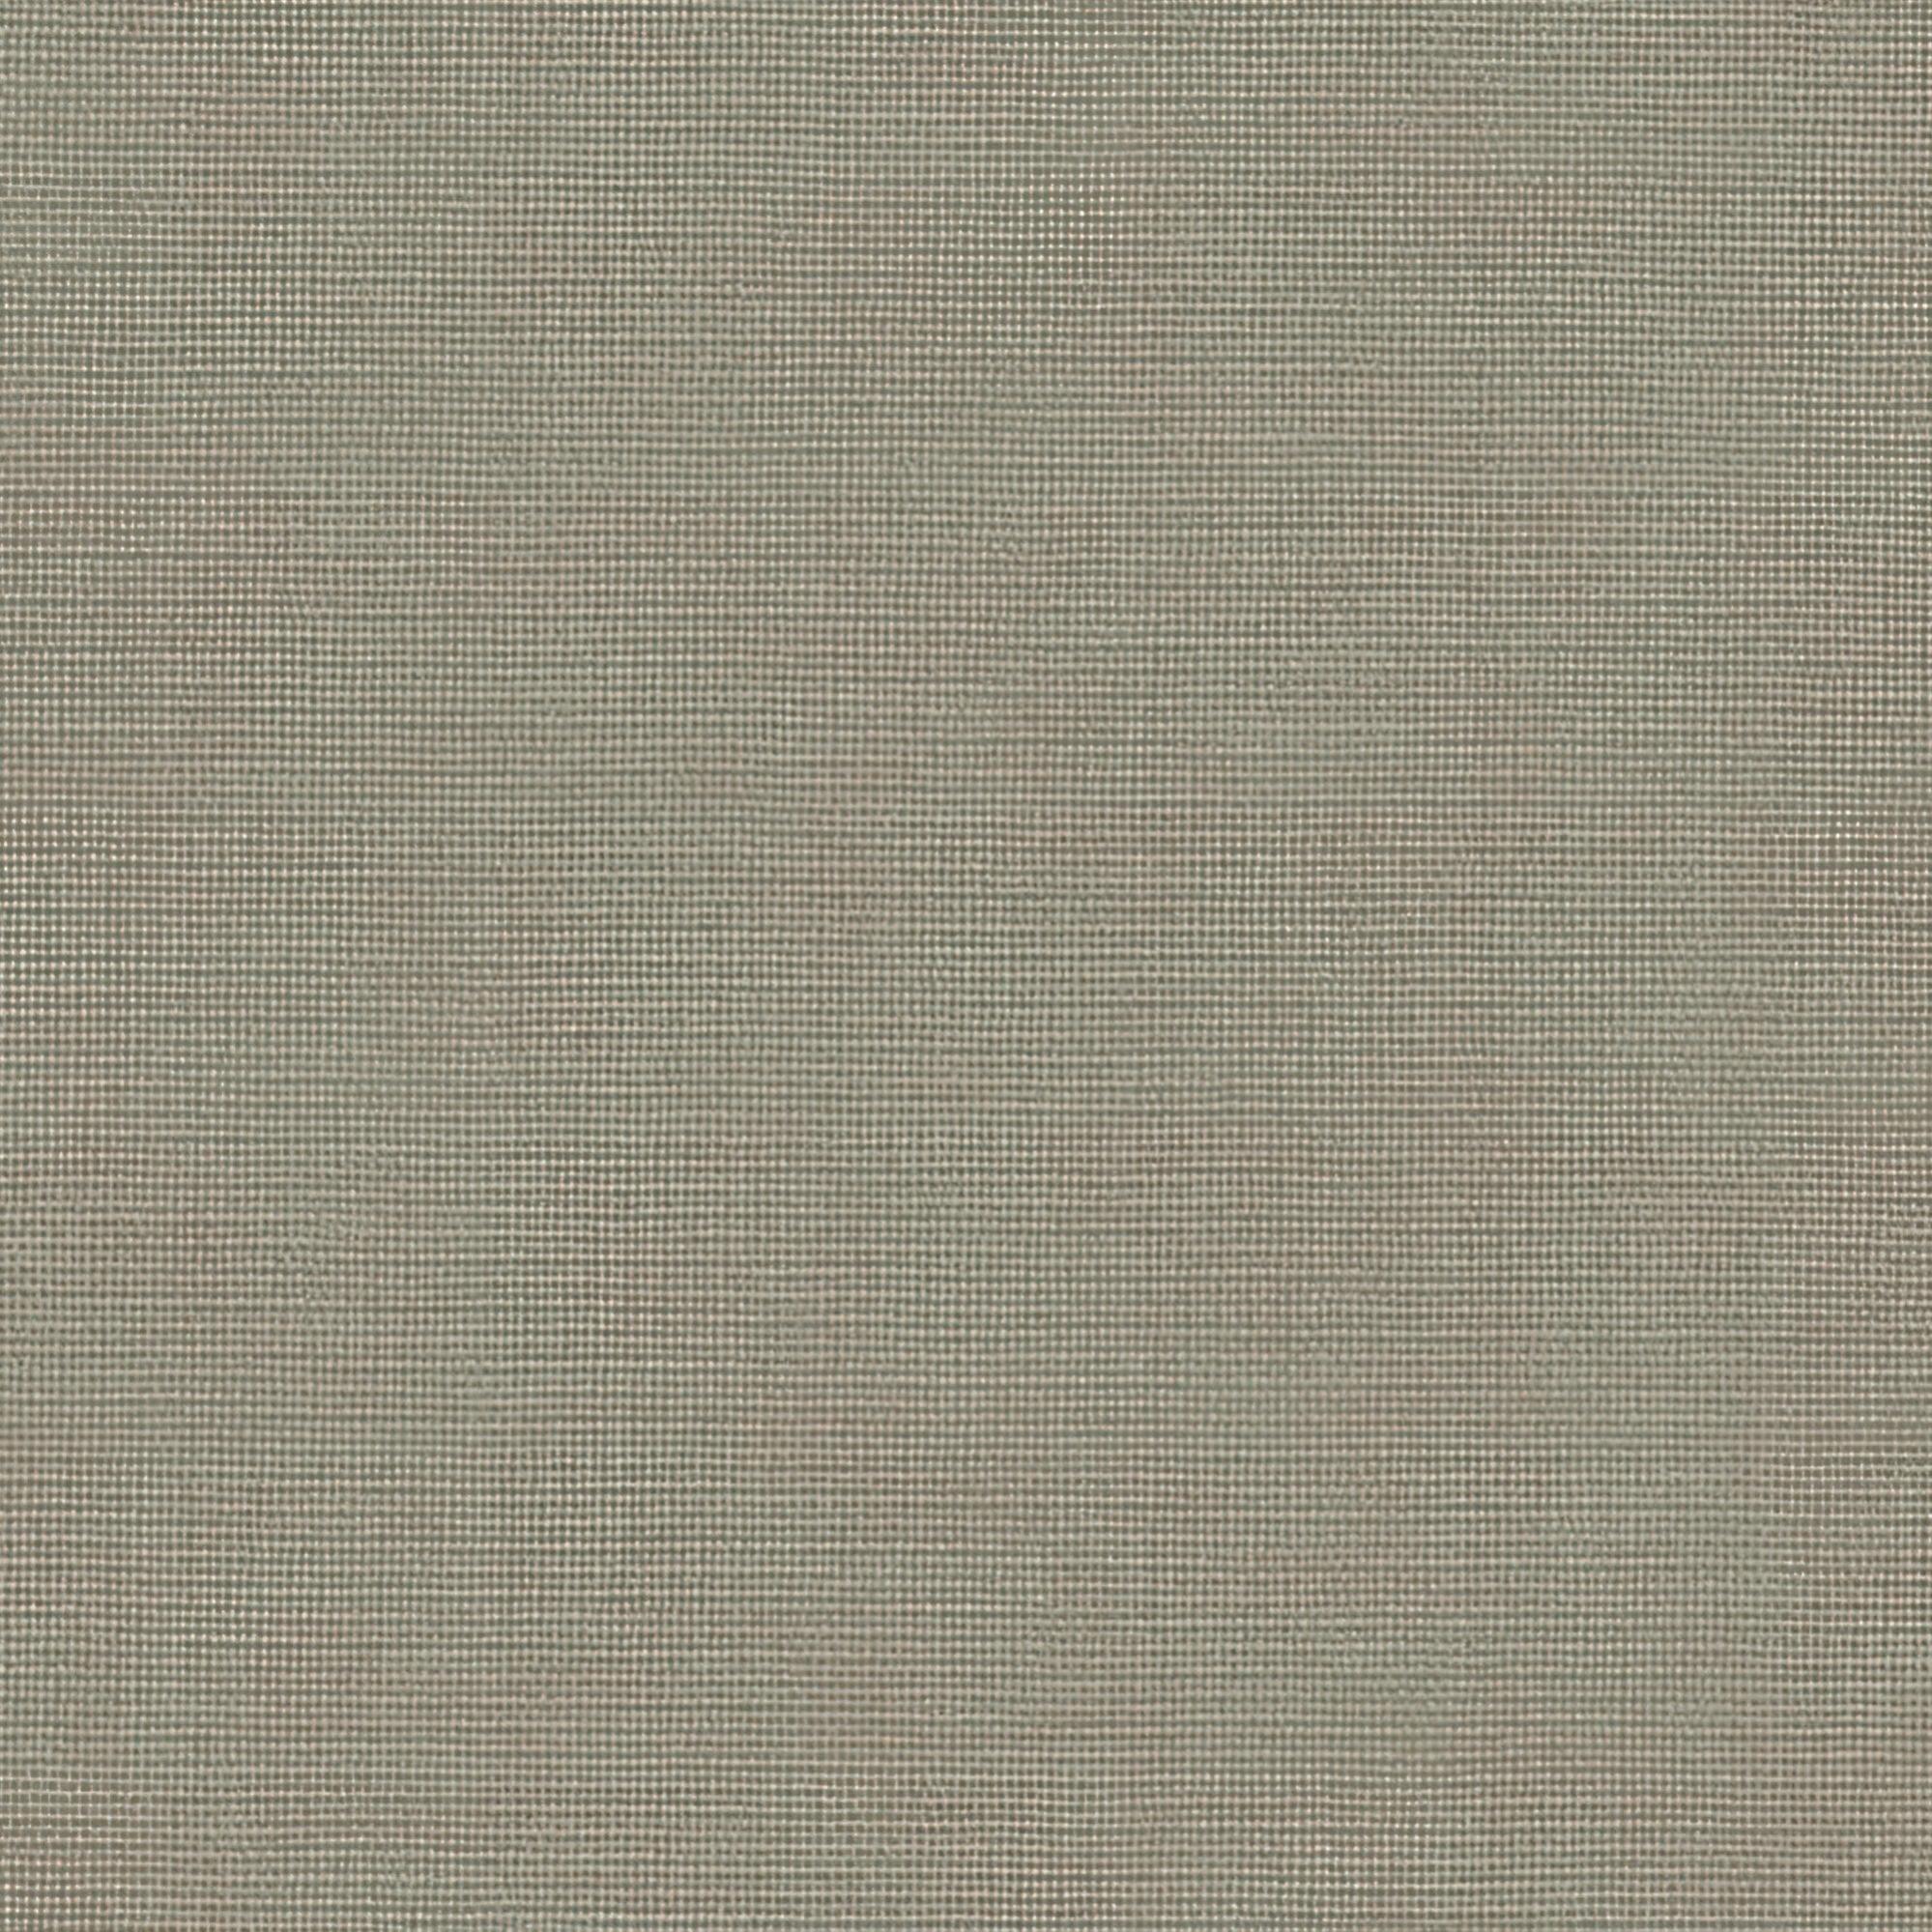 Tela al corte tapicería loneta brest marron ancho 280 cm